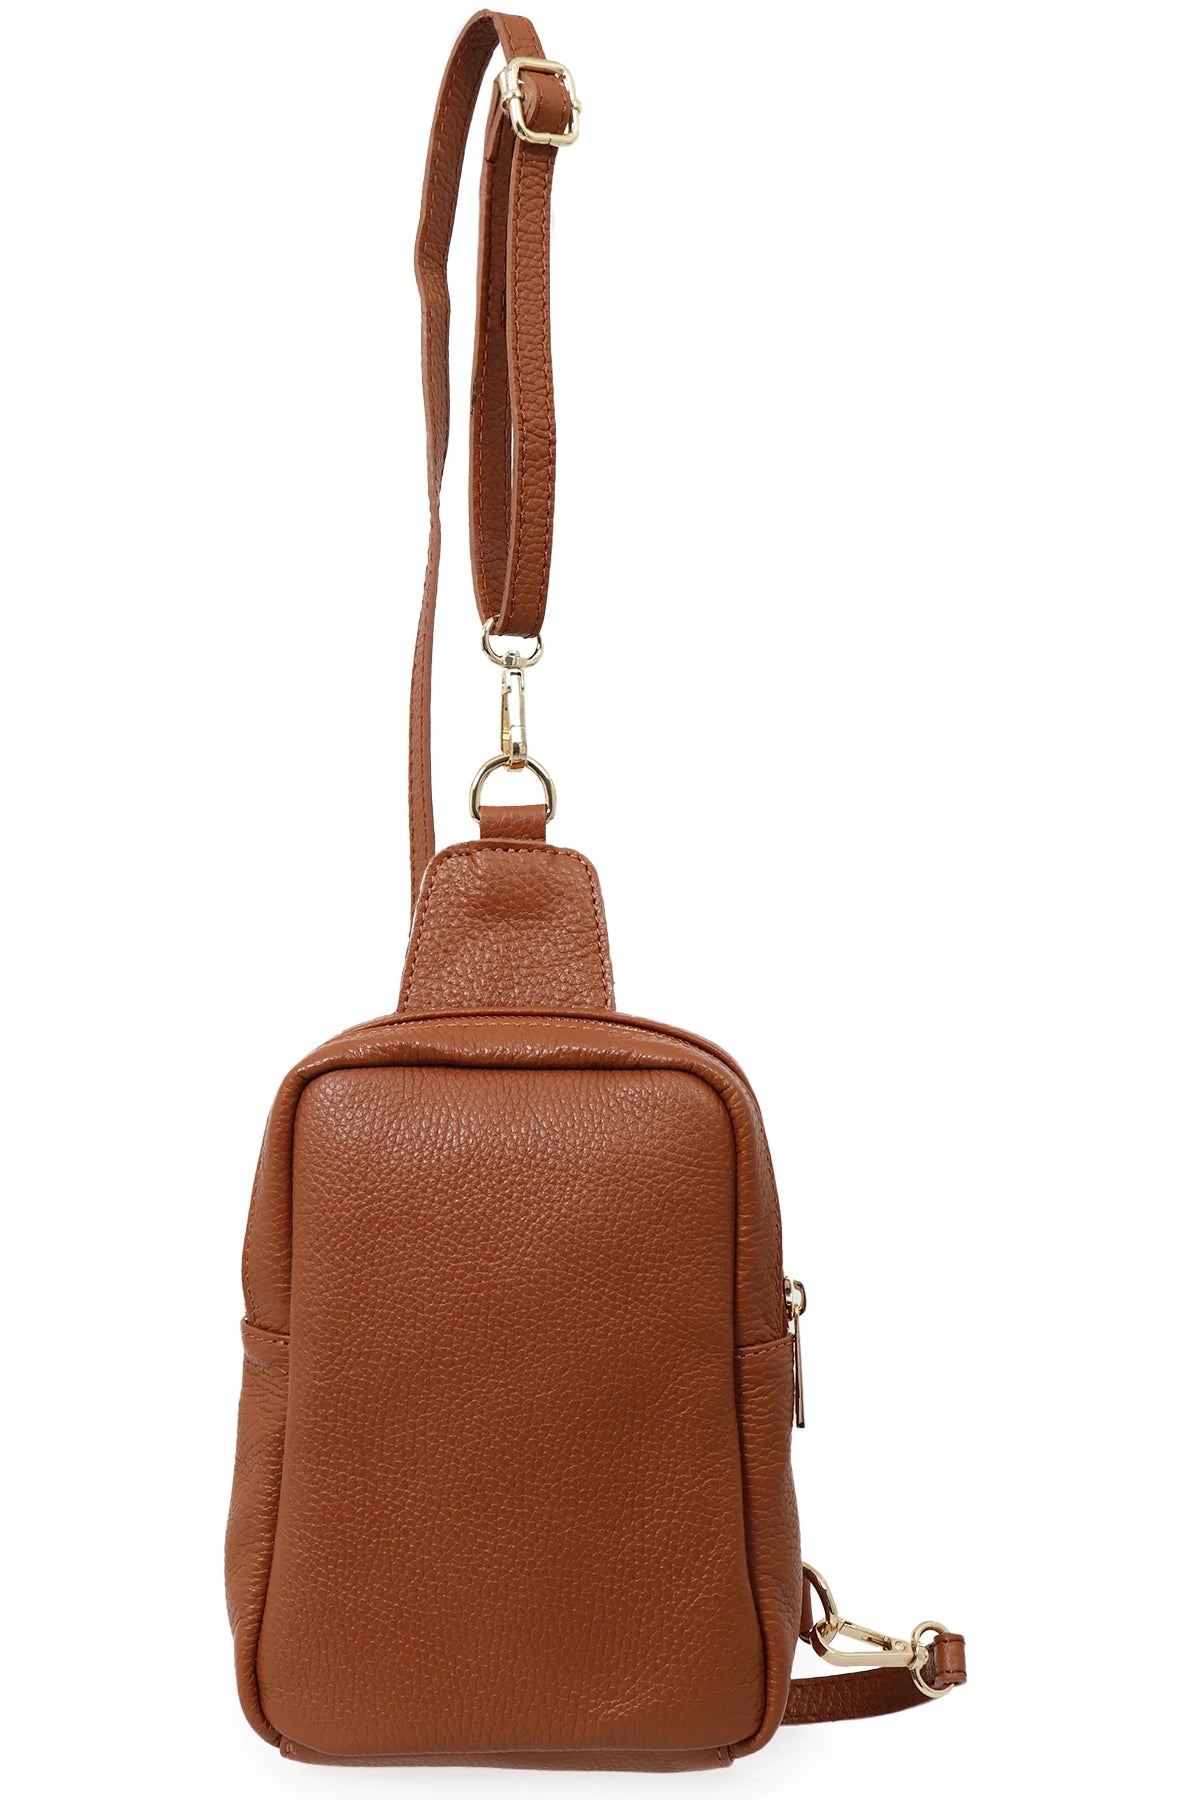 Italian Leather Sling Bag - Tan